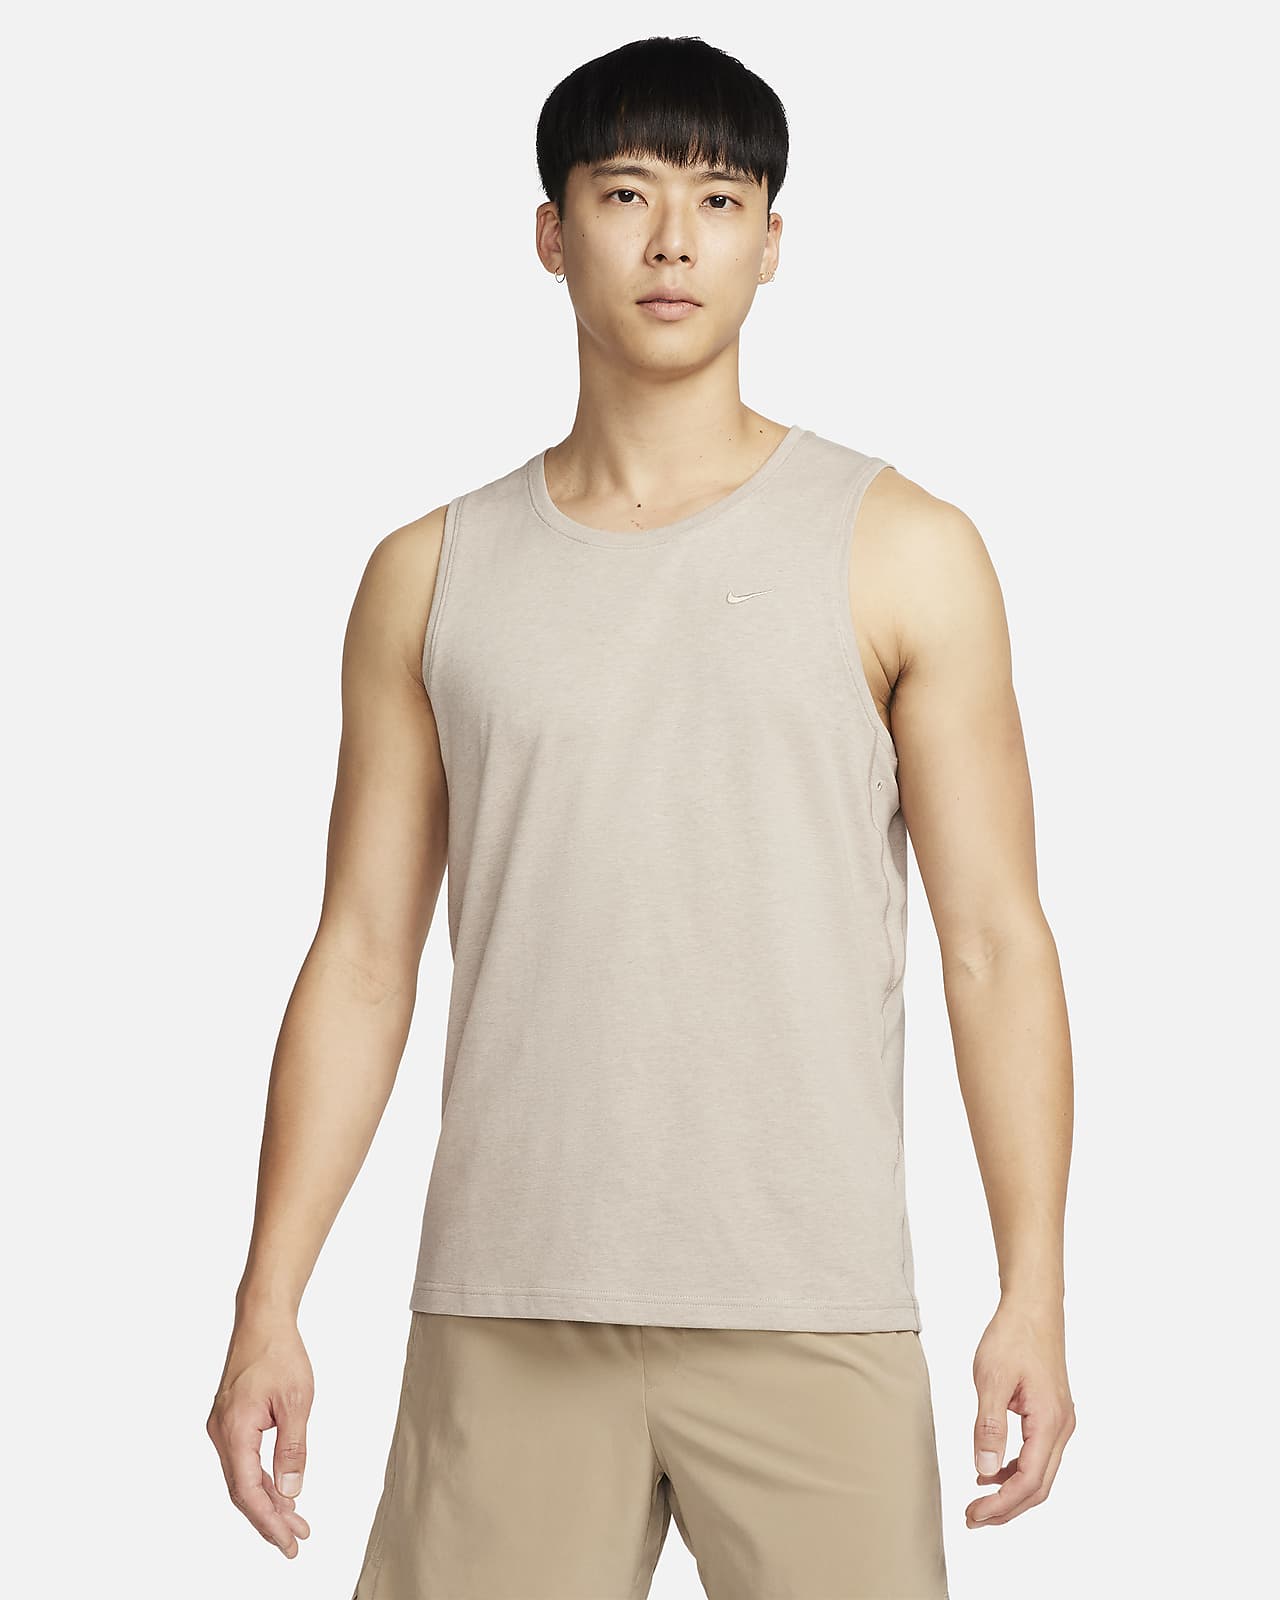 Nike Sleeveless t-shirts for Men